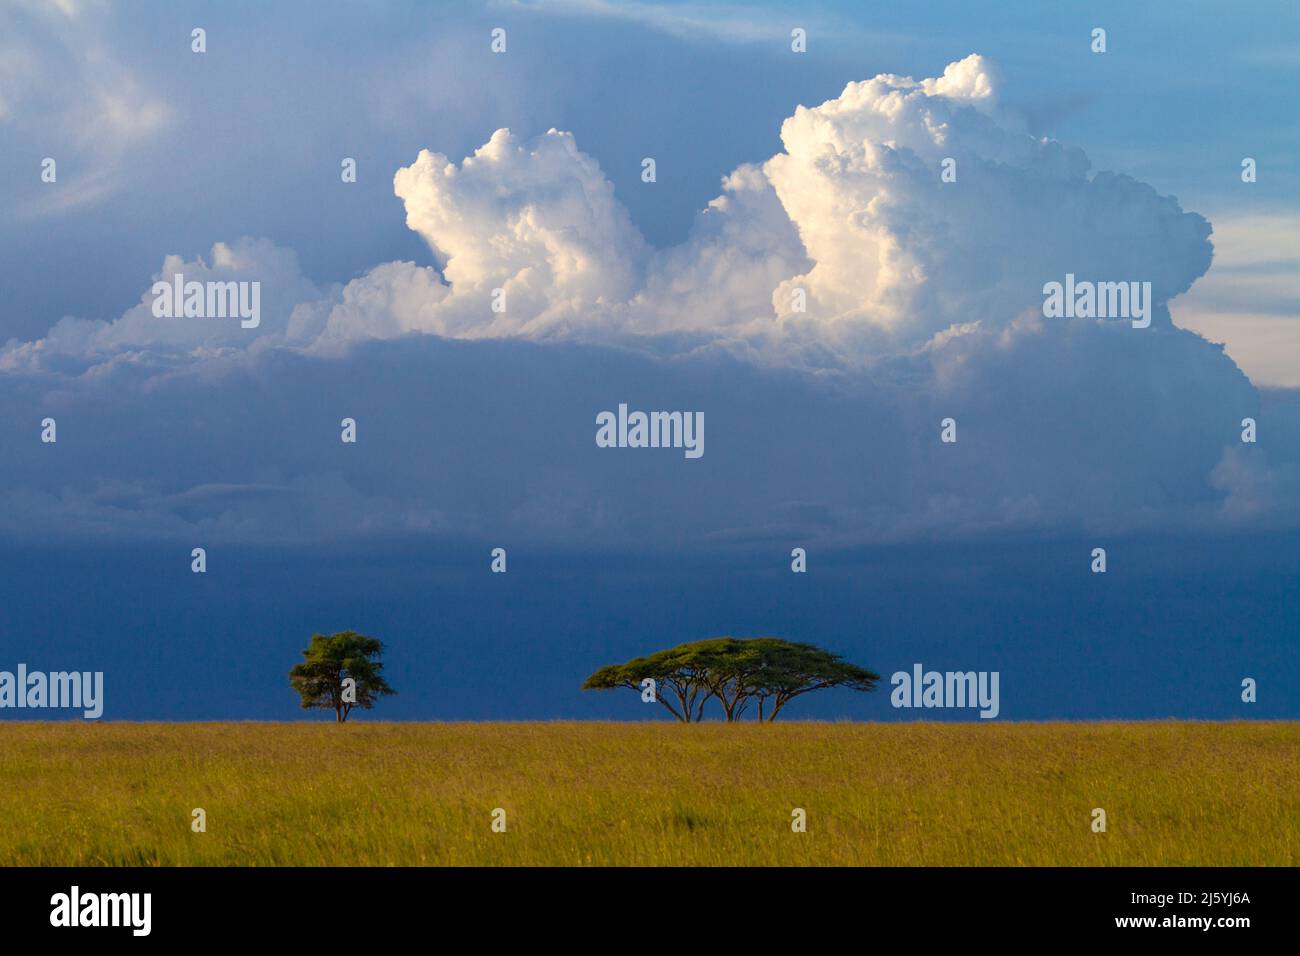 Clouds Over Acacia Trees On The African Savanna, Serengeti National Park, Tanzania Stock Photo